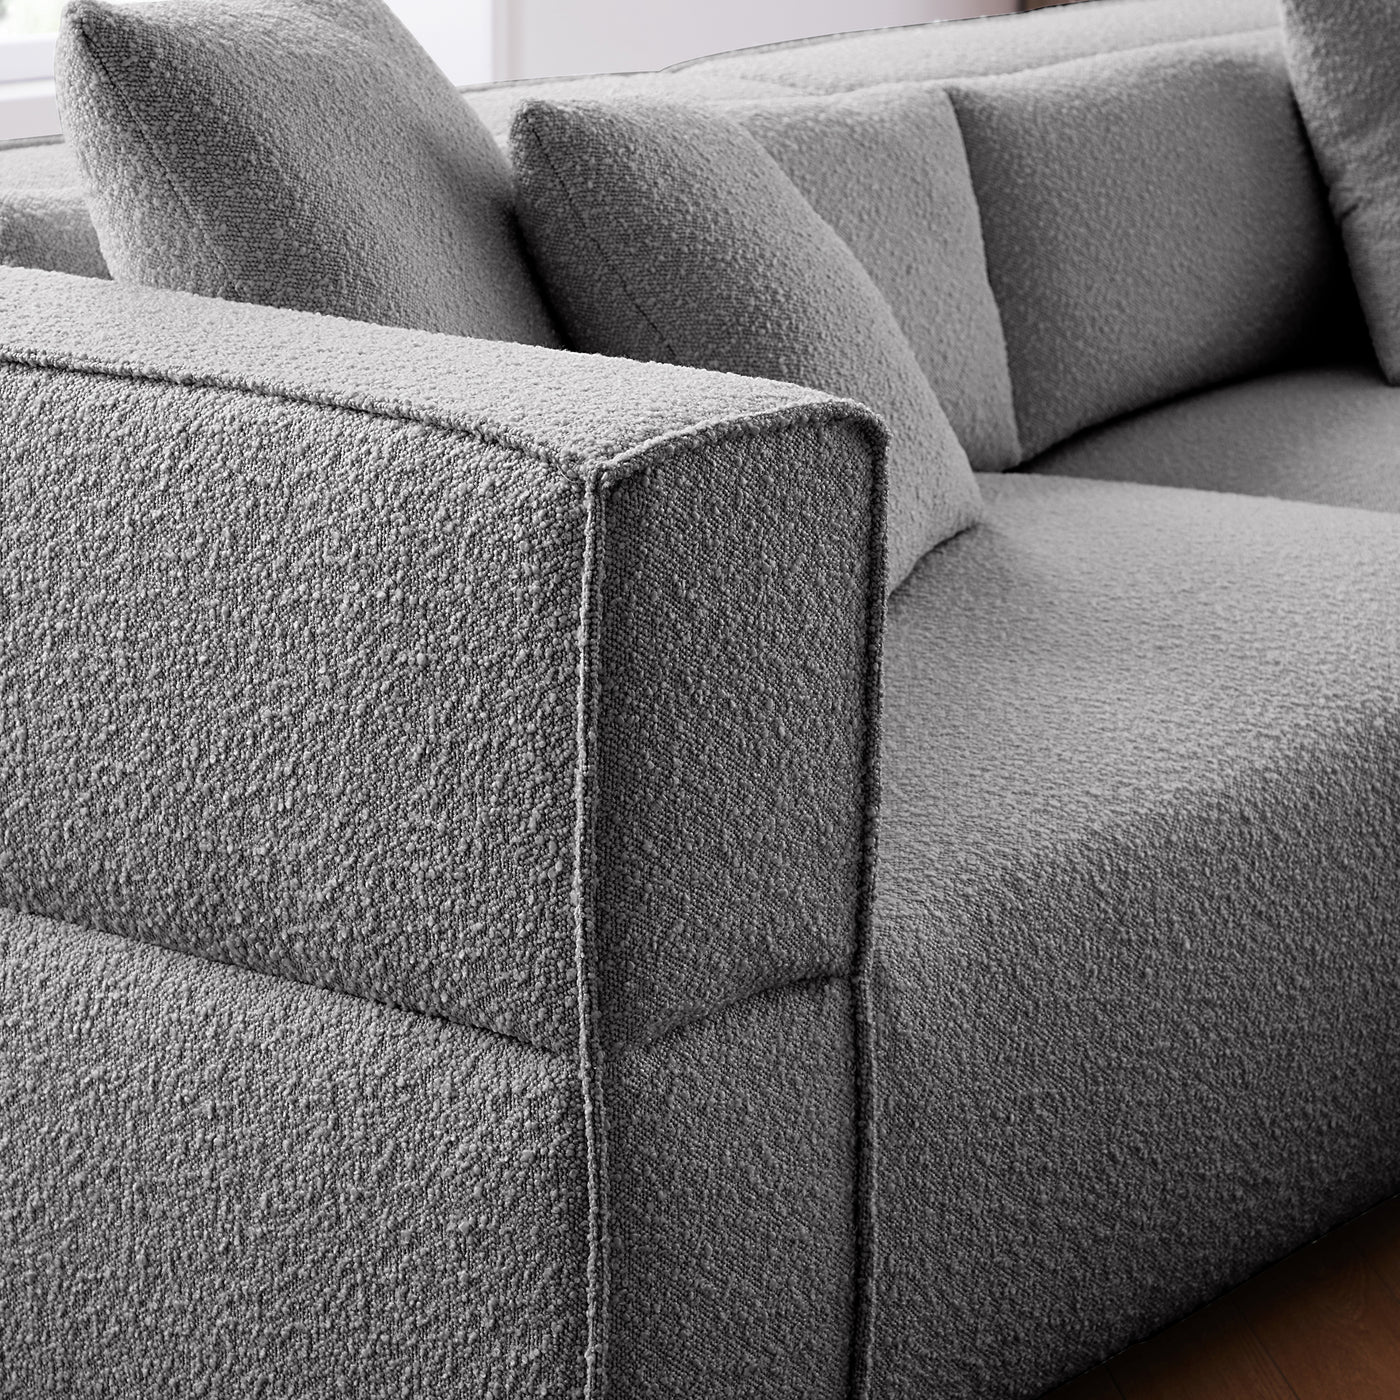 Nordic Modern Creamy Sofa with Ottoman-Gray